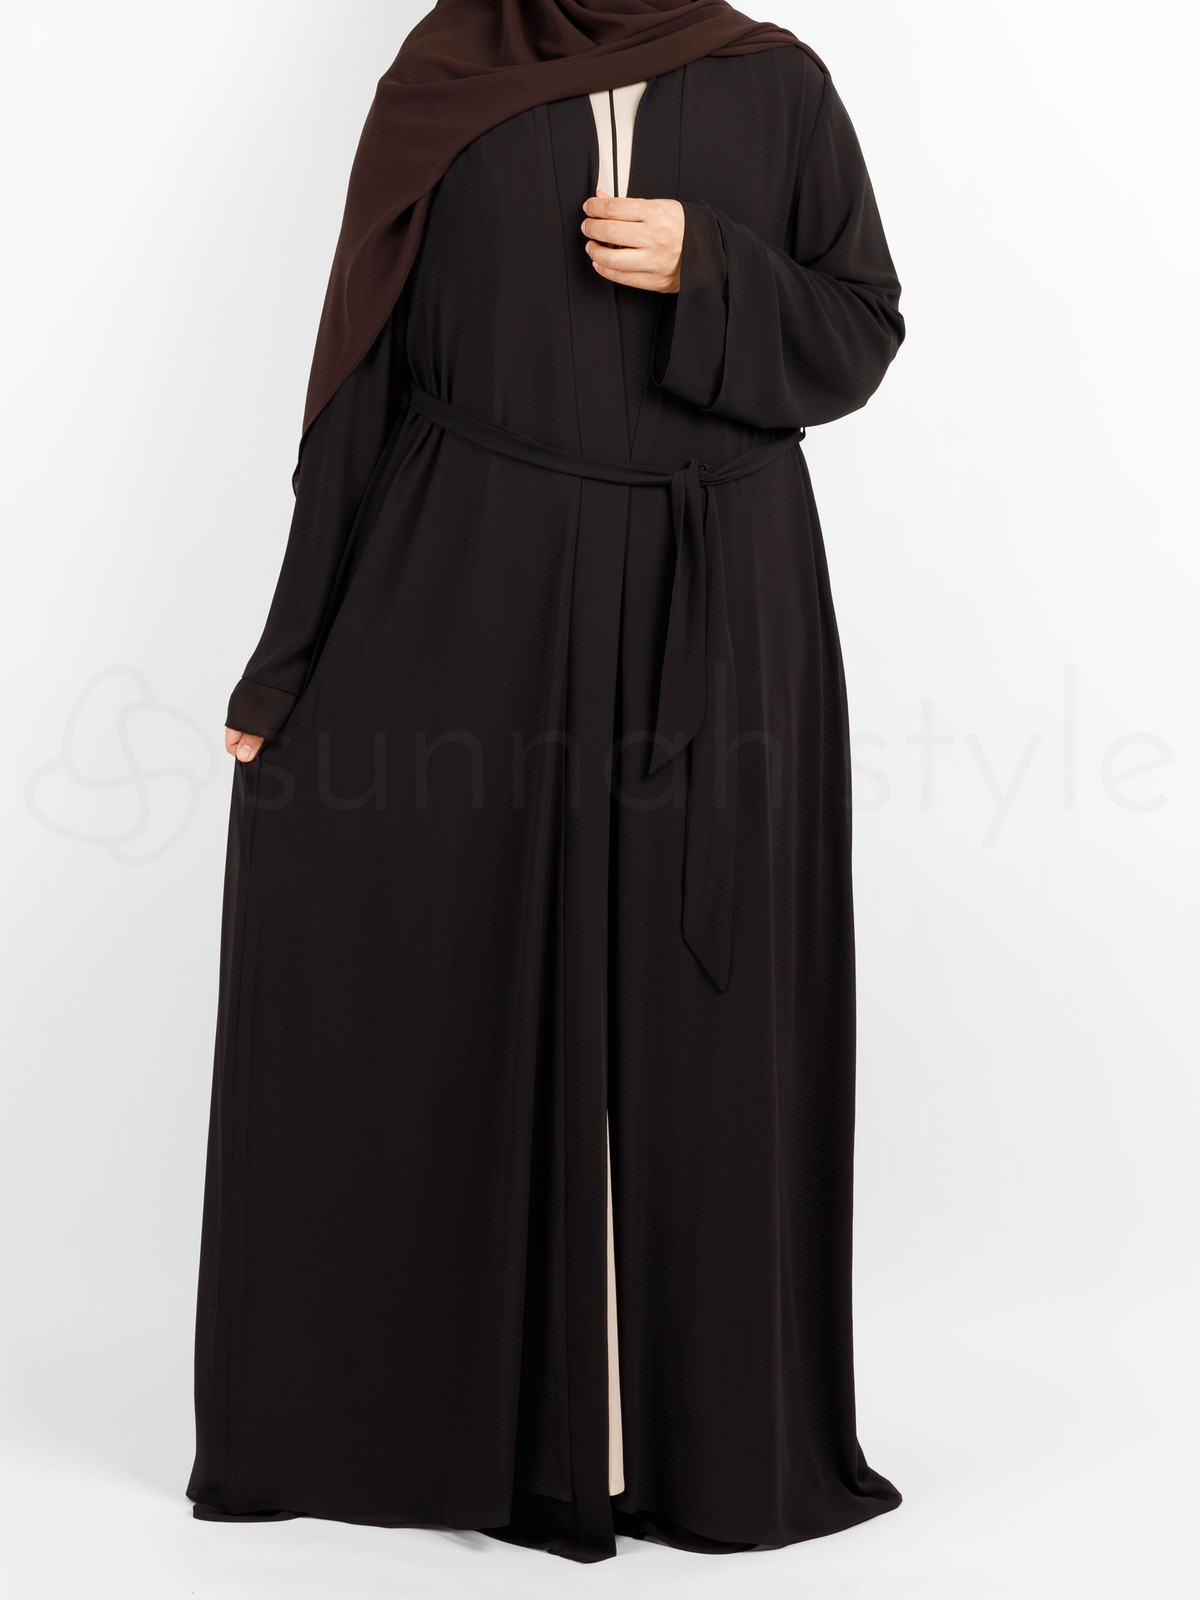 Sunnah Style - Chiffon Layered Robe (Black)